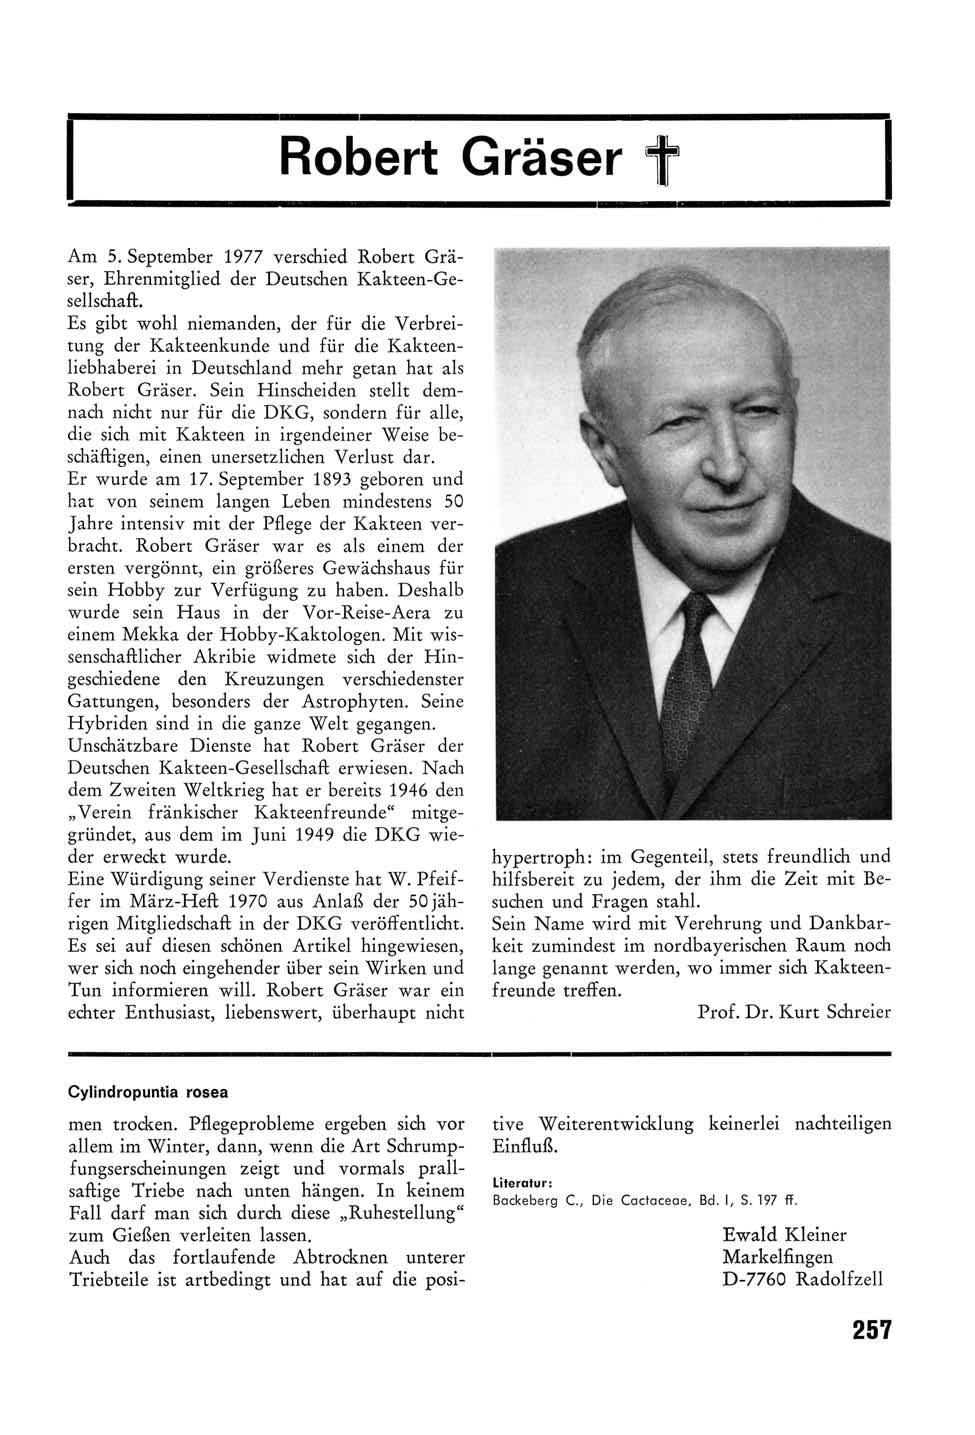 Robert Gräser Am 5. September 1977 verschied Robert Gräser, Ehrenmitglied der Deutschen Kakteen-Gesellschaft.